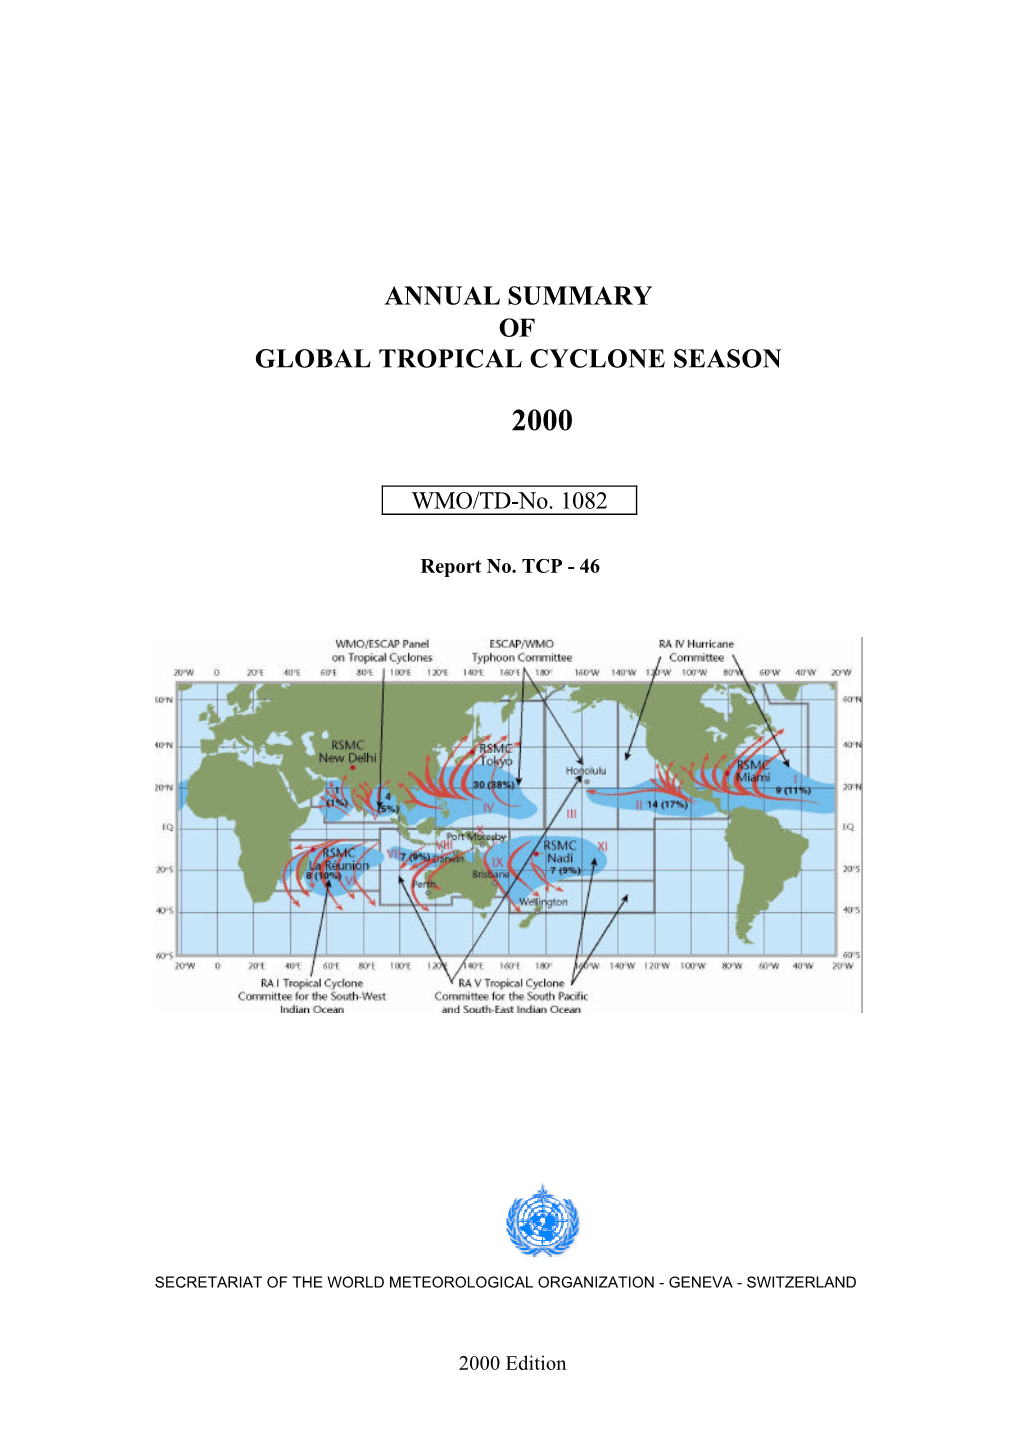 Annual Summary of Global Tropical Cyclone Season